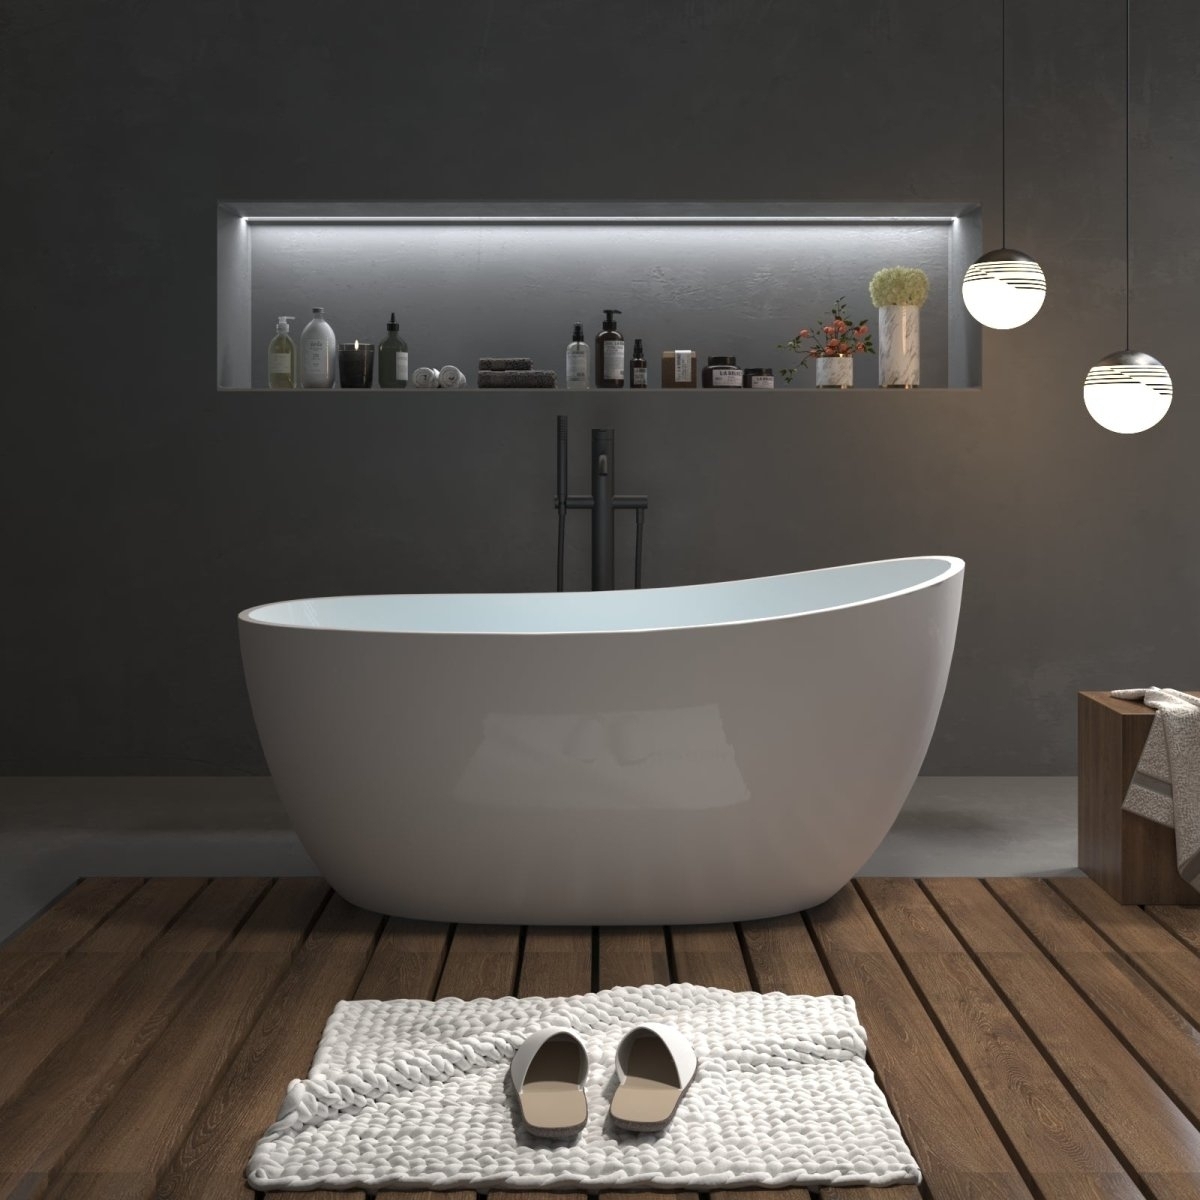 ExBrite 59 Bathtub Acrylic Free Standing Tub Oval Shape Soaking Tub, Adjustable Freestanding Gloss White